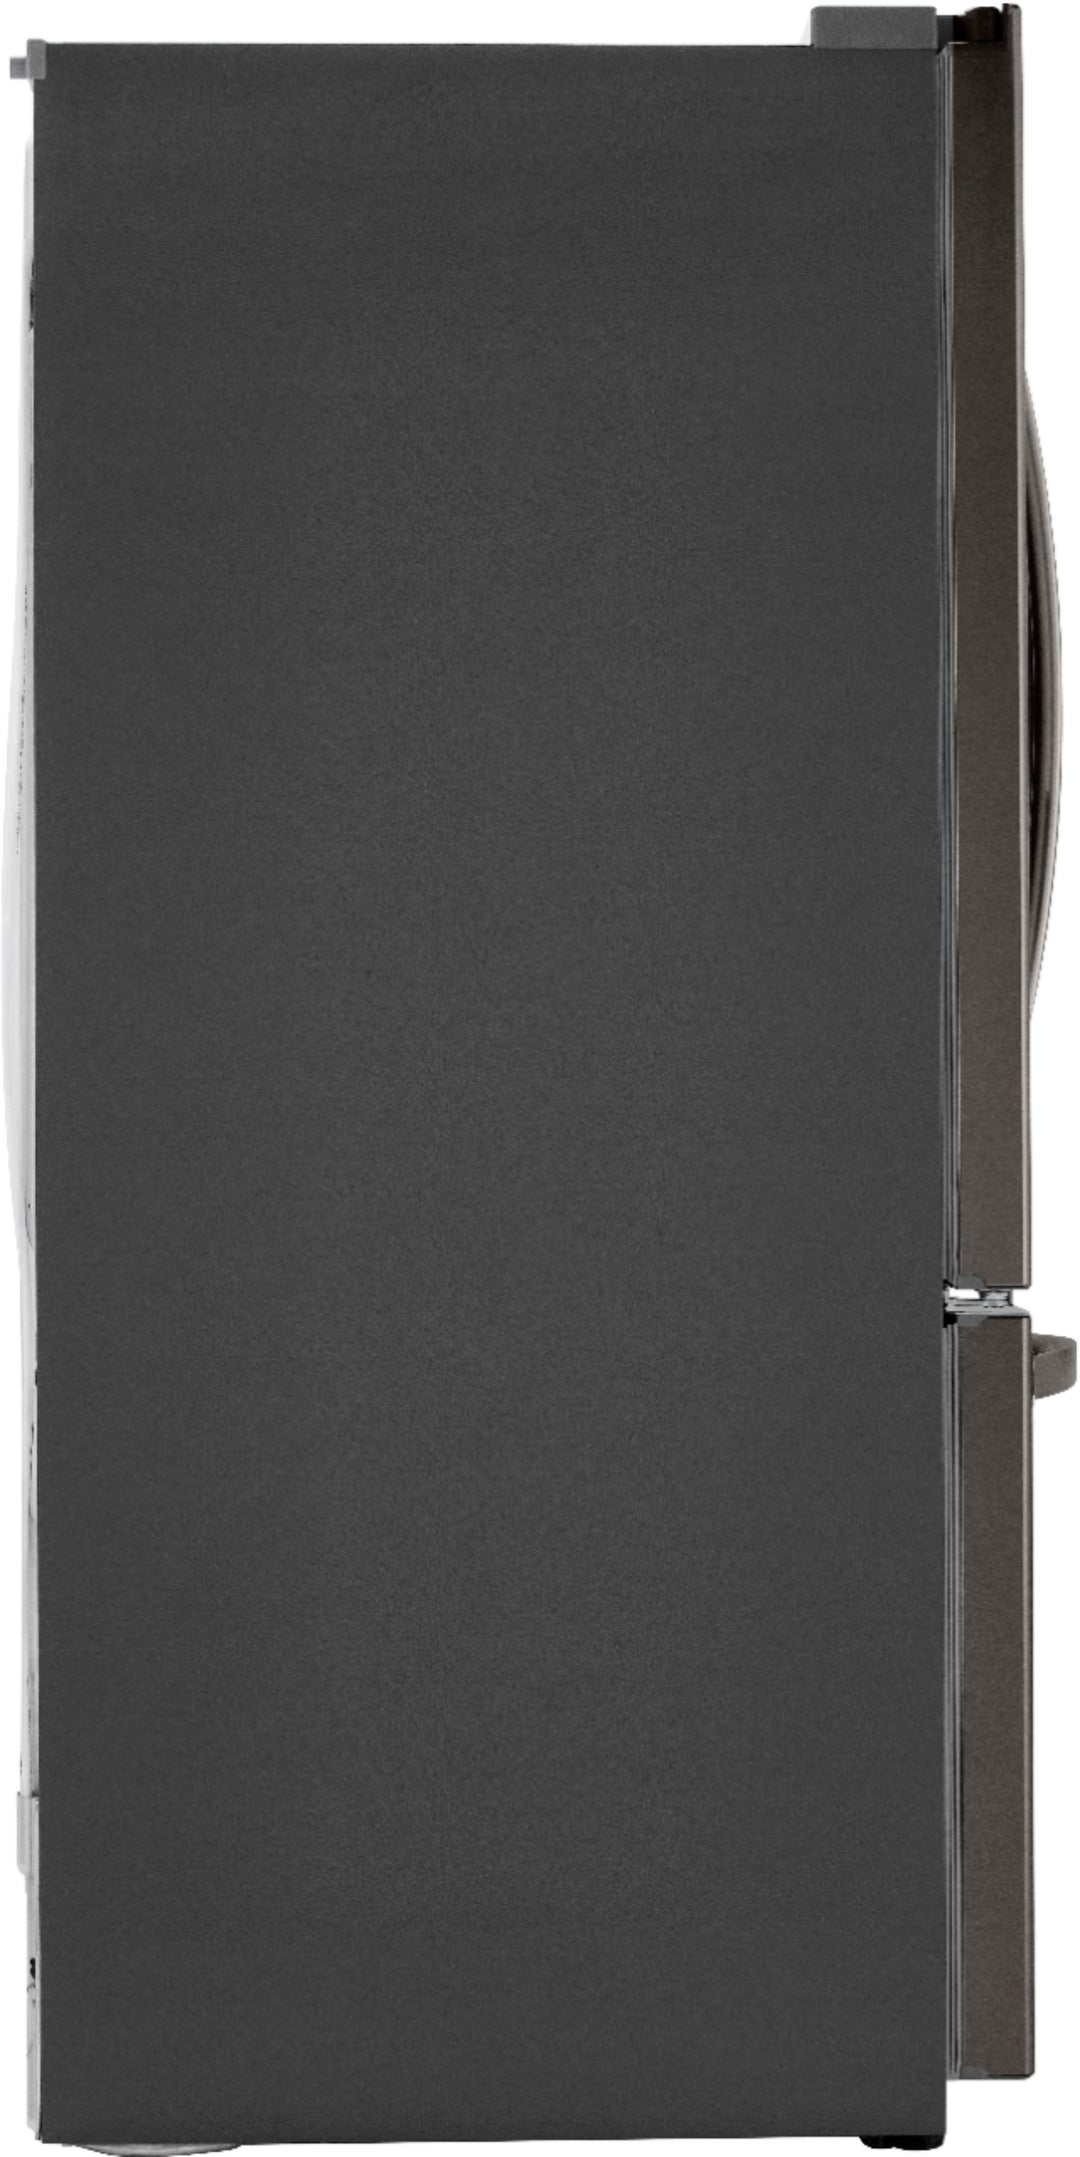 LG - 29 Cu. Ft. 3-Door French Door Smart Refrigerator with Ice Maker and External Water Dispenser - Black stainless steel_18